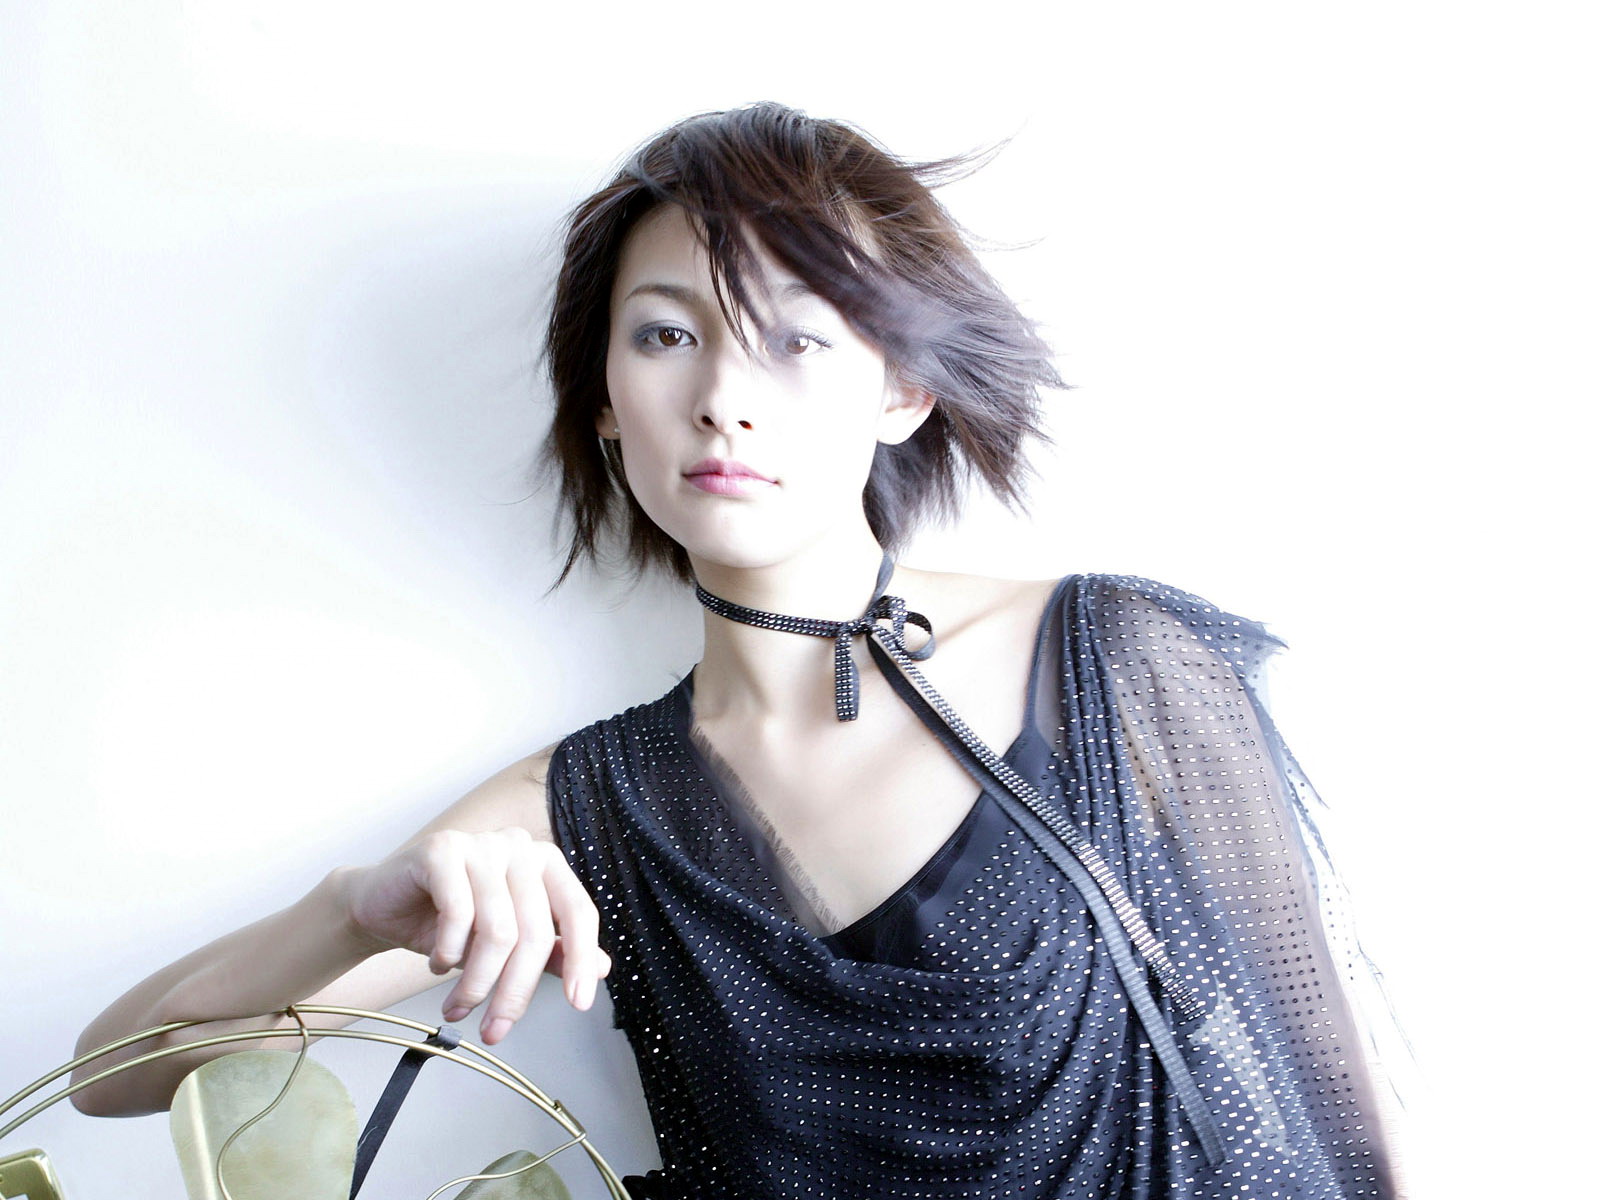 Rika Yuuki Asian model enjoys showing her lingerie clad 